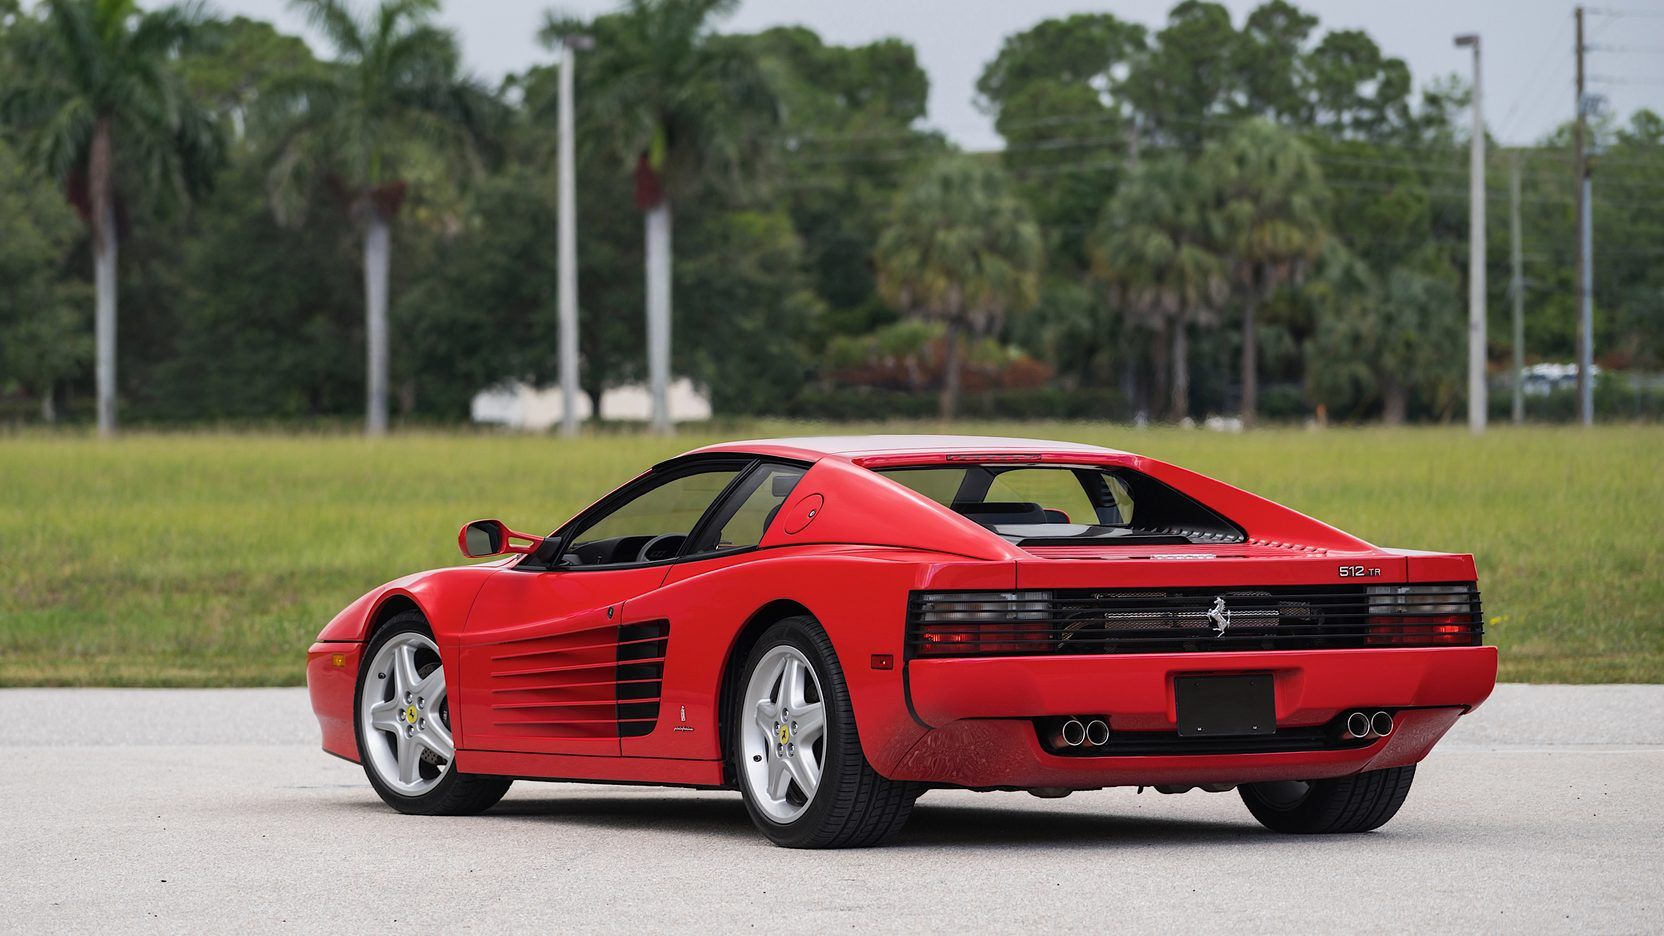 Ferrari Testarossa up for auction